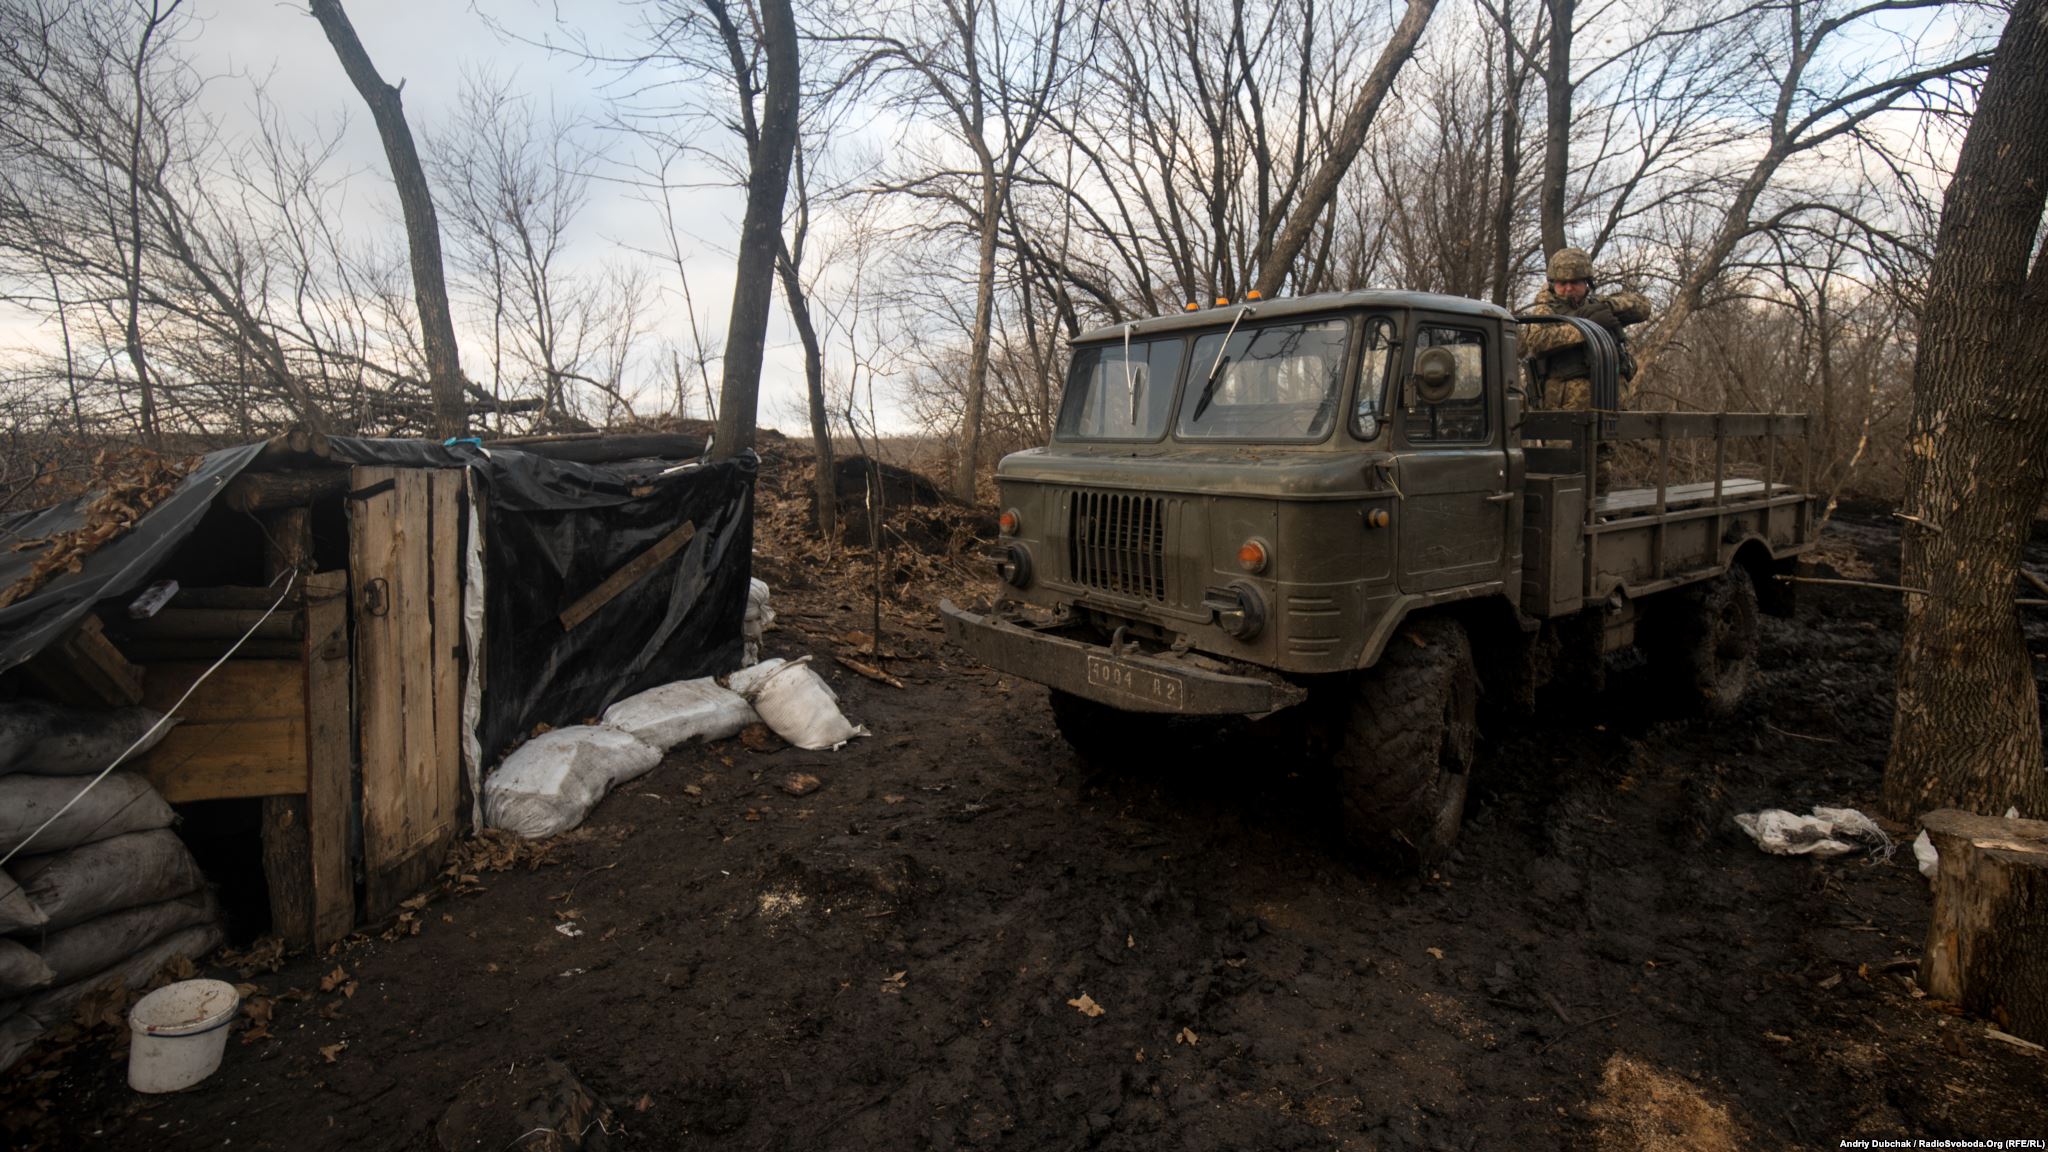 Entrance to a dugout and “shishiga” car (photo by ukrainian military photographer Andriy Dubchak)